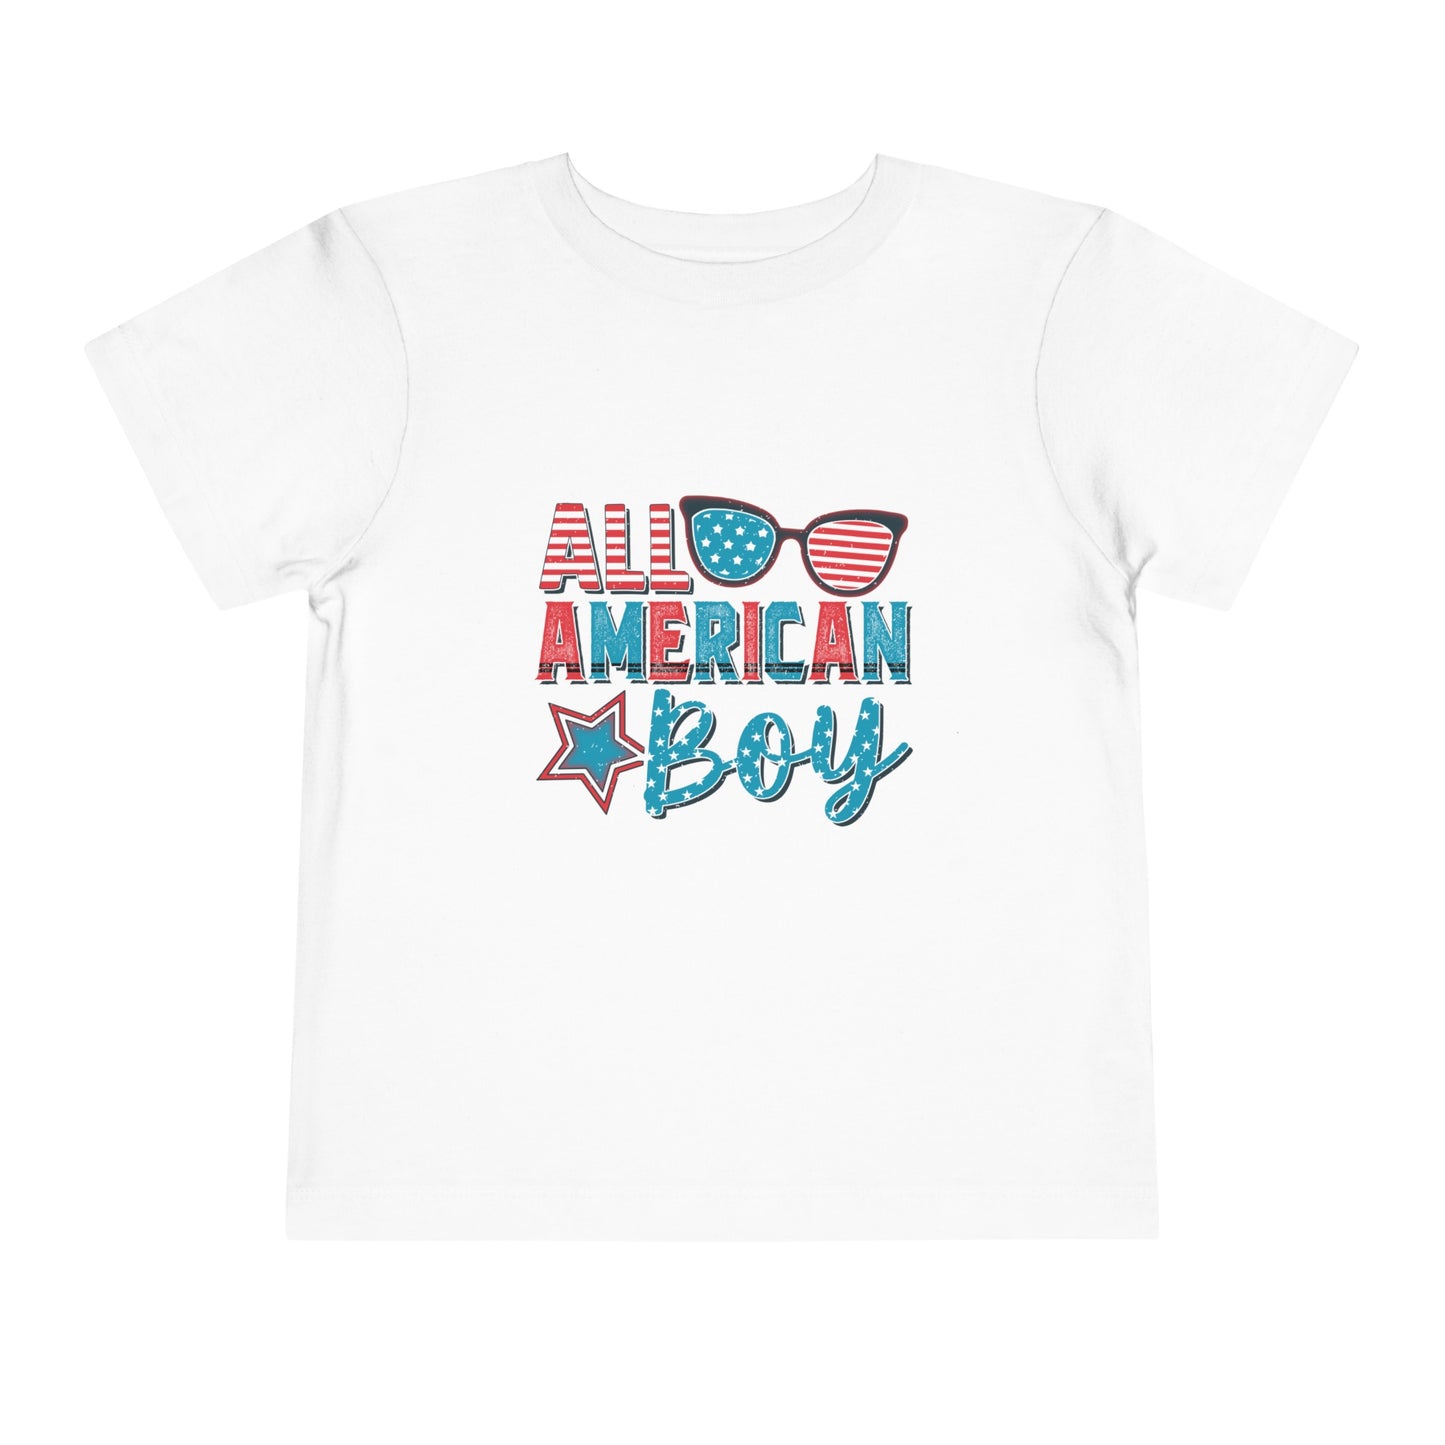 All American Boy Toddler Boy's Short Sleeve Tee